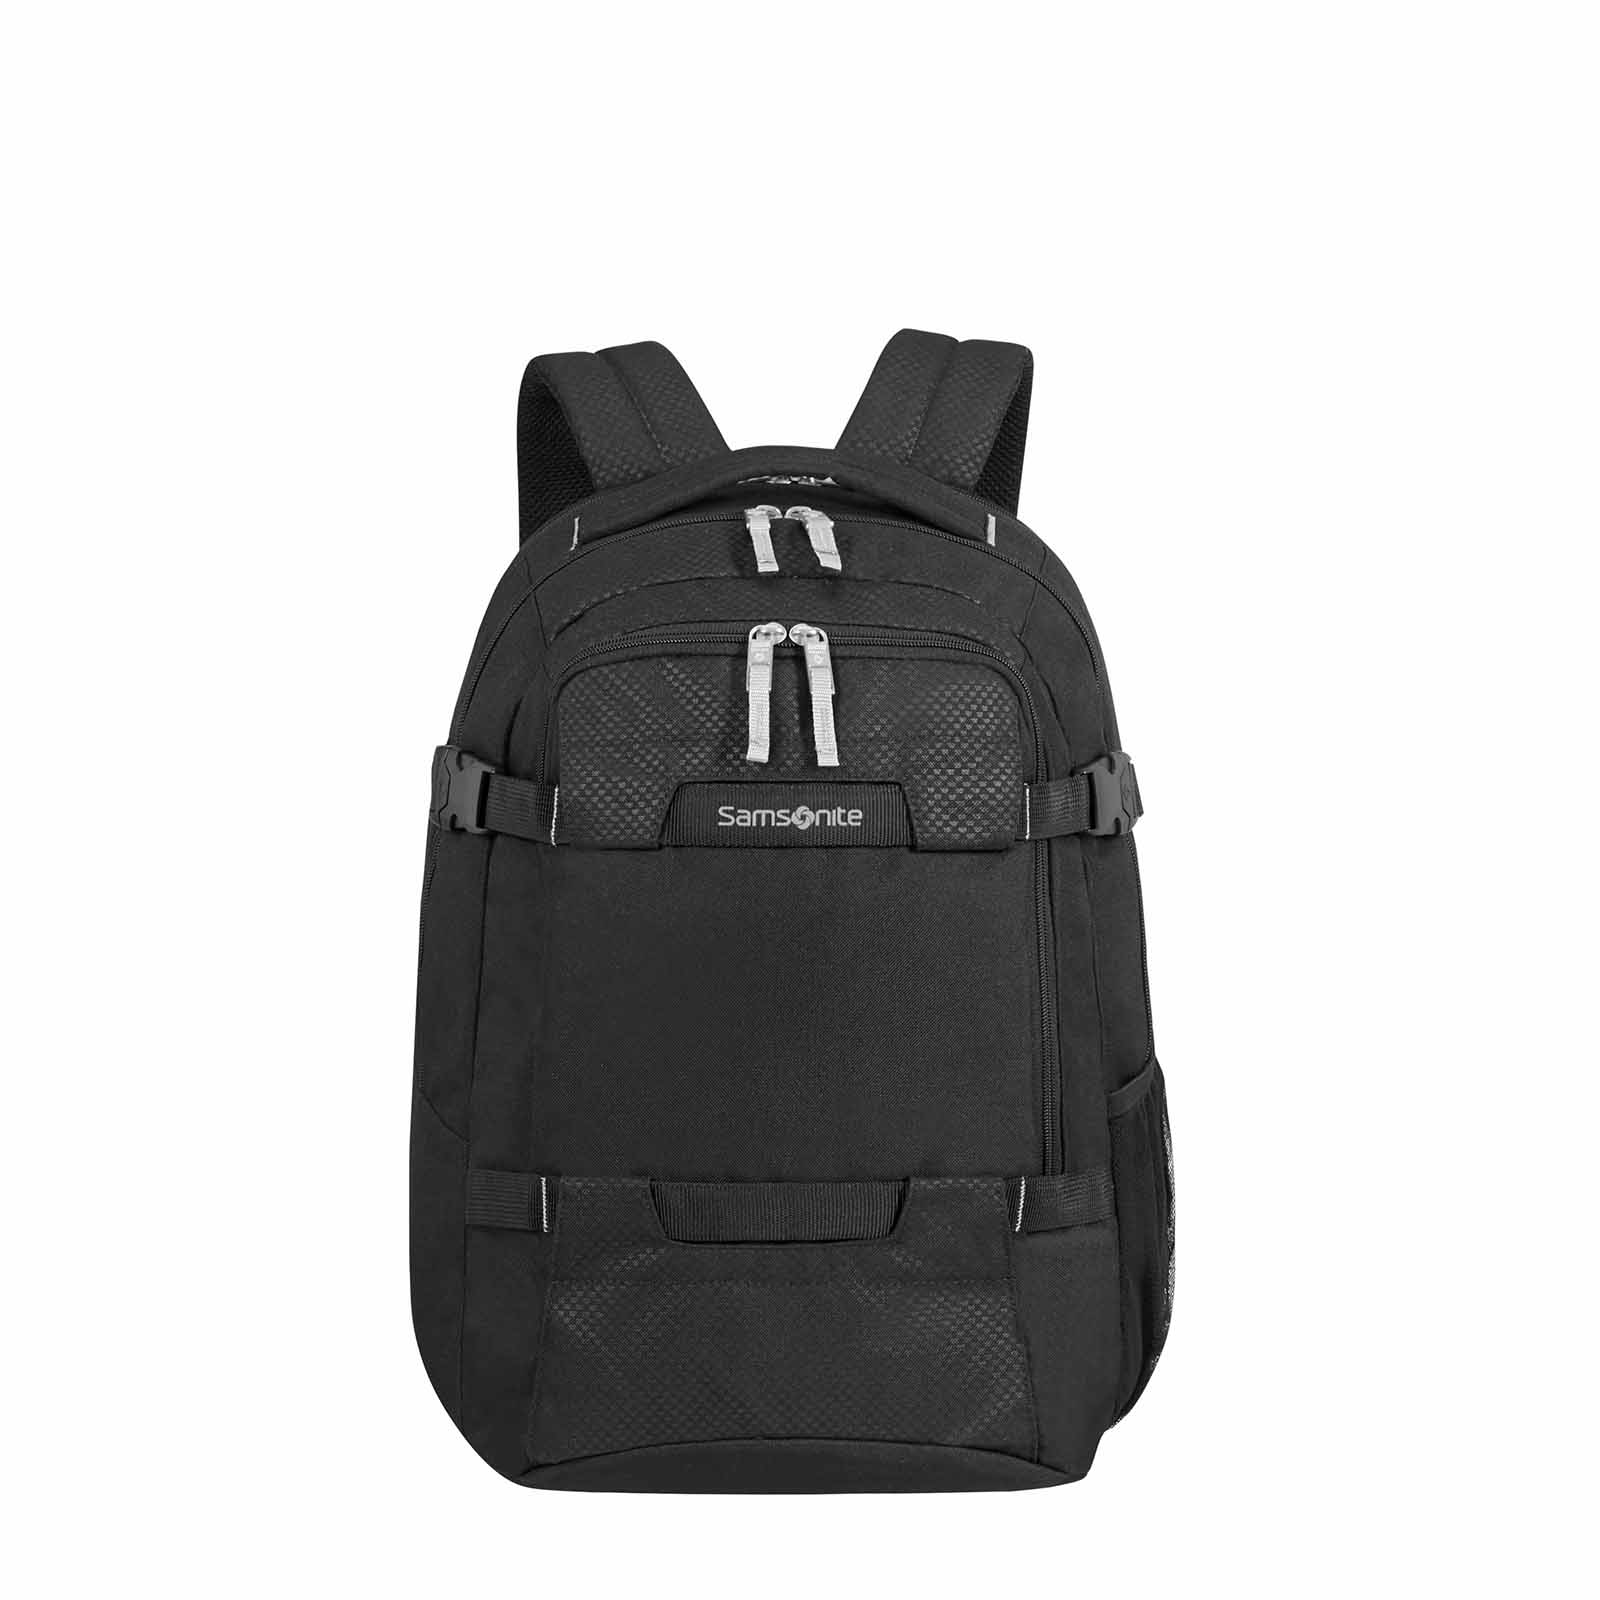 Samsonite-Sonora-15-Inch-Laptop-Backpack-Black-Front